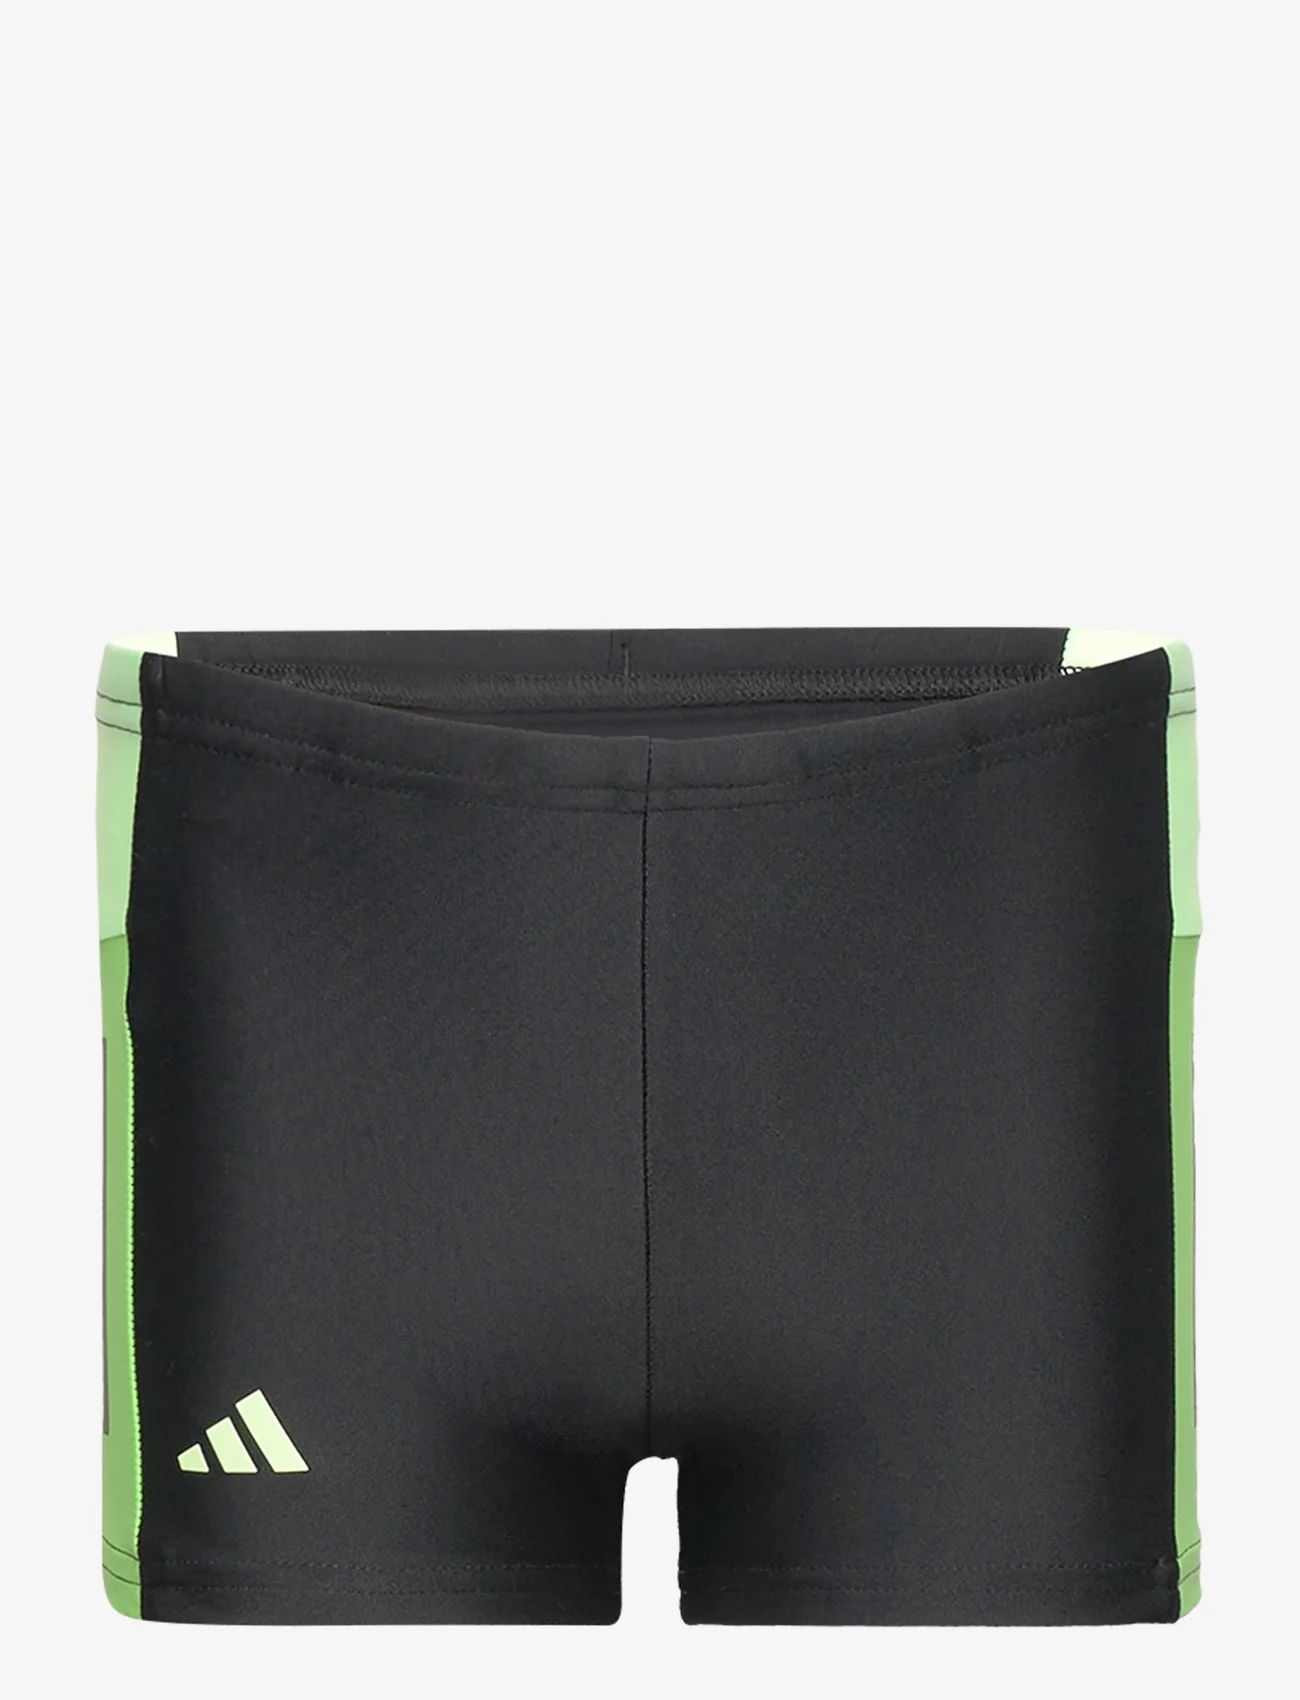 adidas Performance - ADIDAS  COLORBLOCK  3-STRIPES SWIM BOXER - swim shorts - black/grespa/luclim - 0